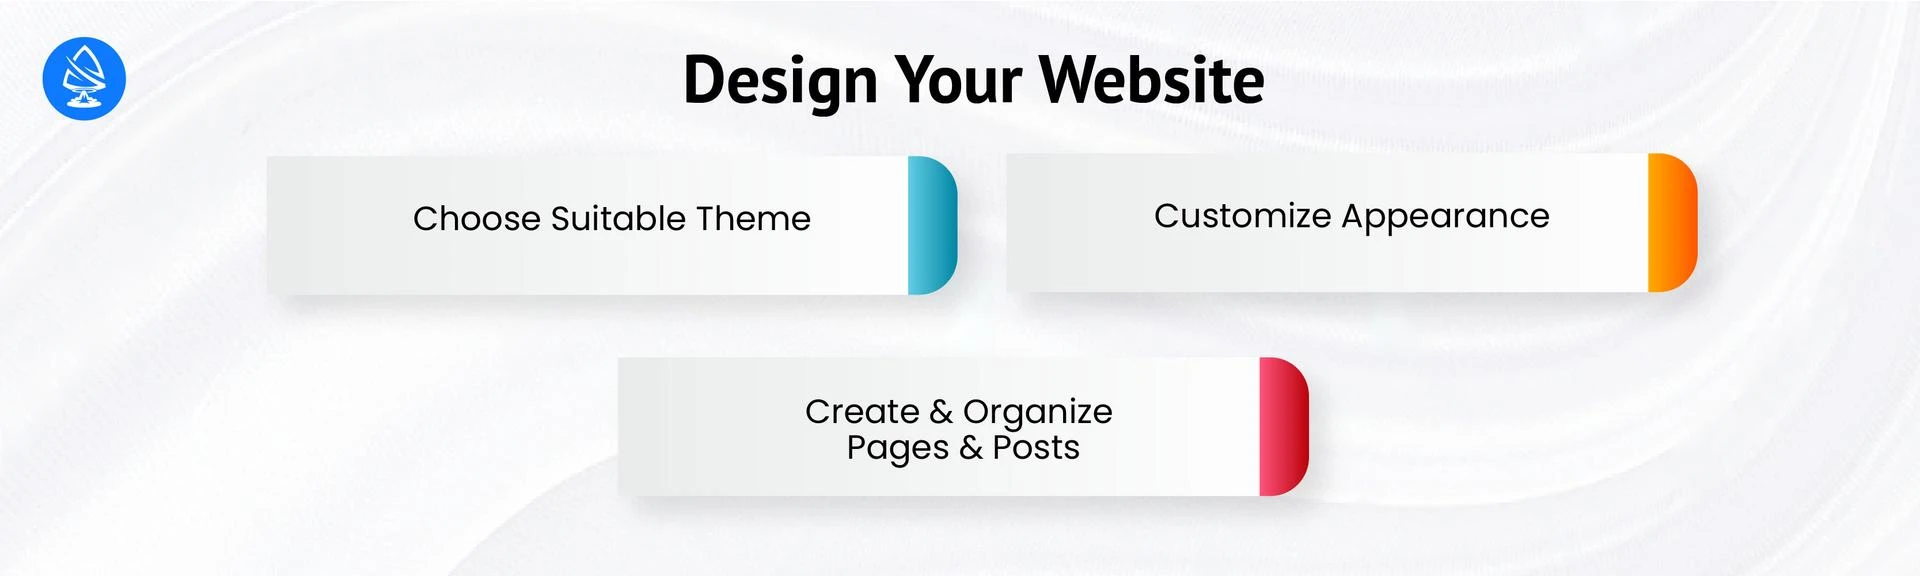 Designing Your Website 